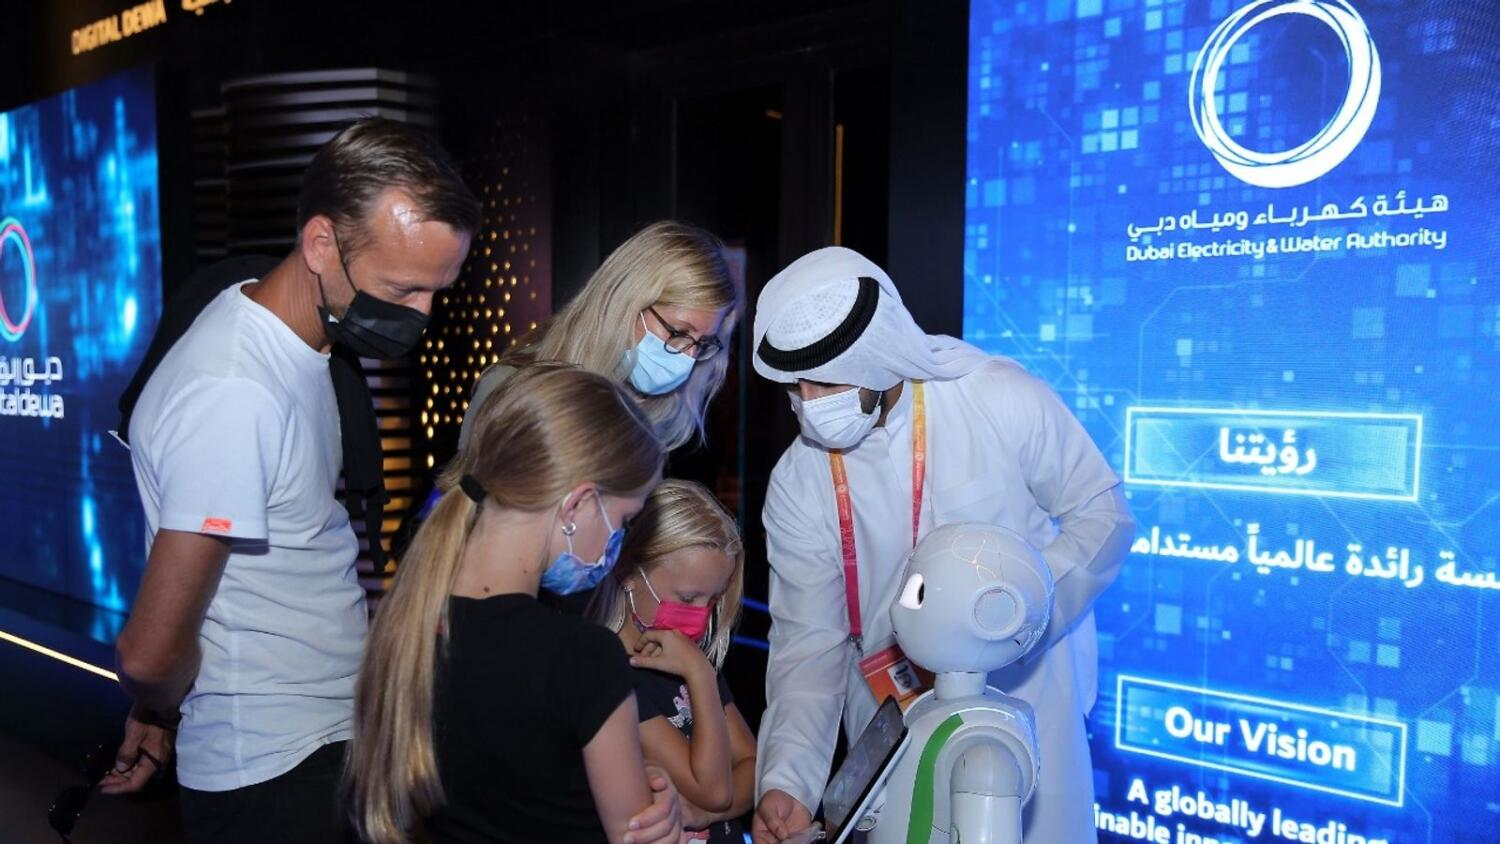 Expo 2020 Dubai: Dewa pavilion welcomes more than 500,000 visitors since October – EQ Mag Pro